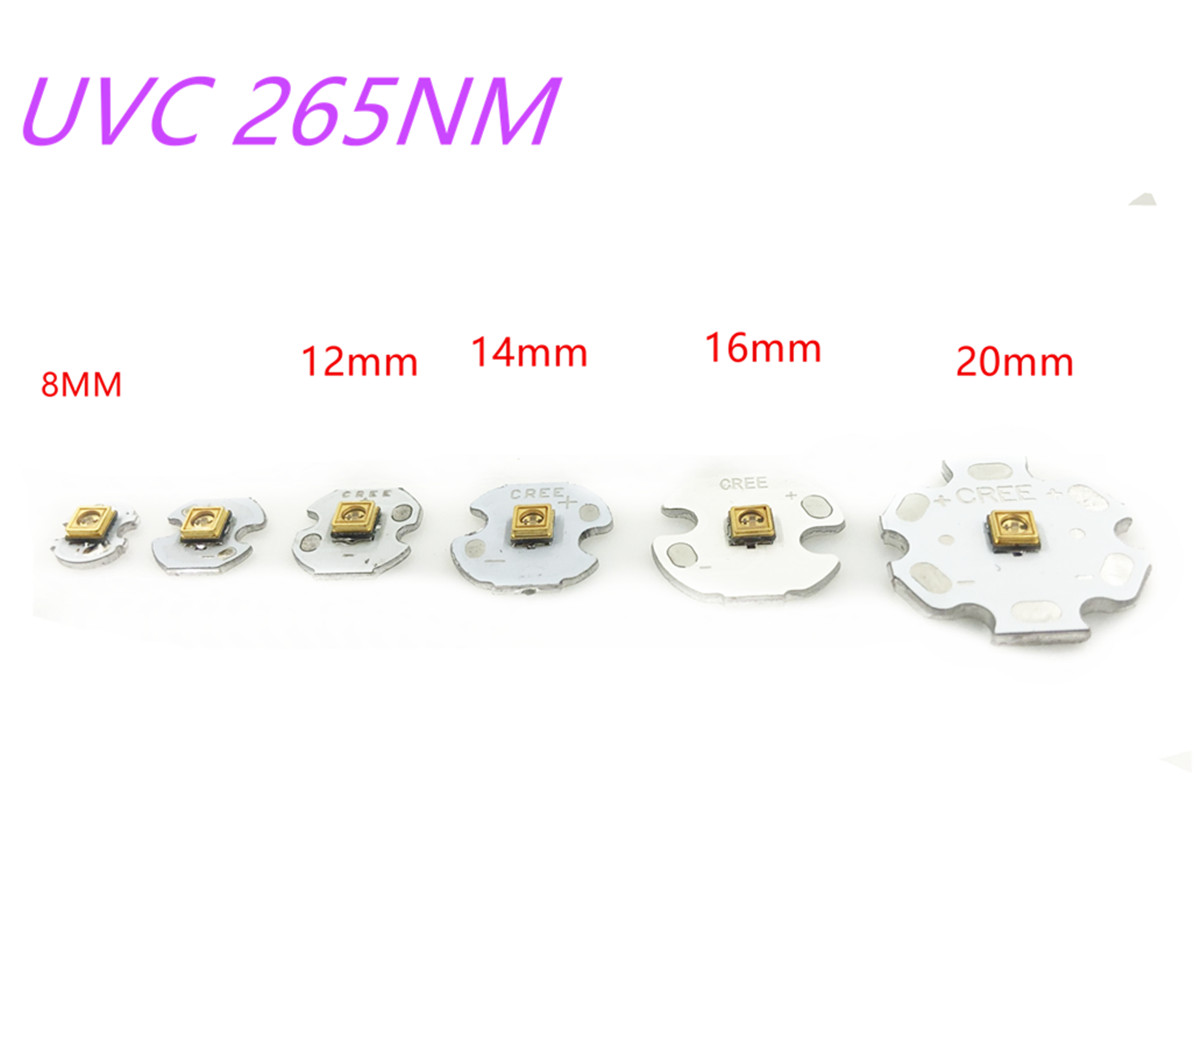 275nm UVC LED Lamp beads for UV disinfection equipment 265nm 285nm SMD 3535 chip LED Deep violet ultraviolet light 6V